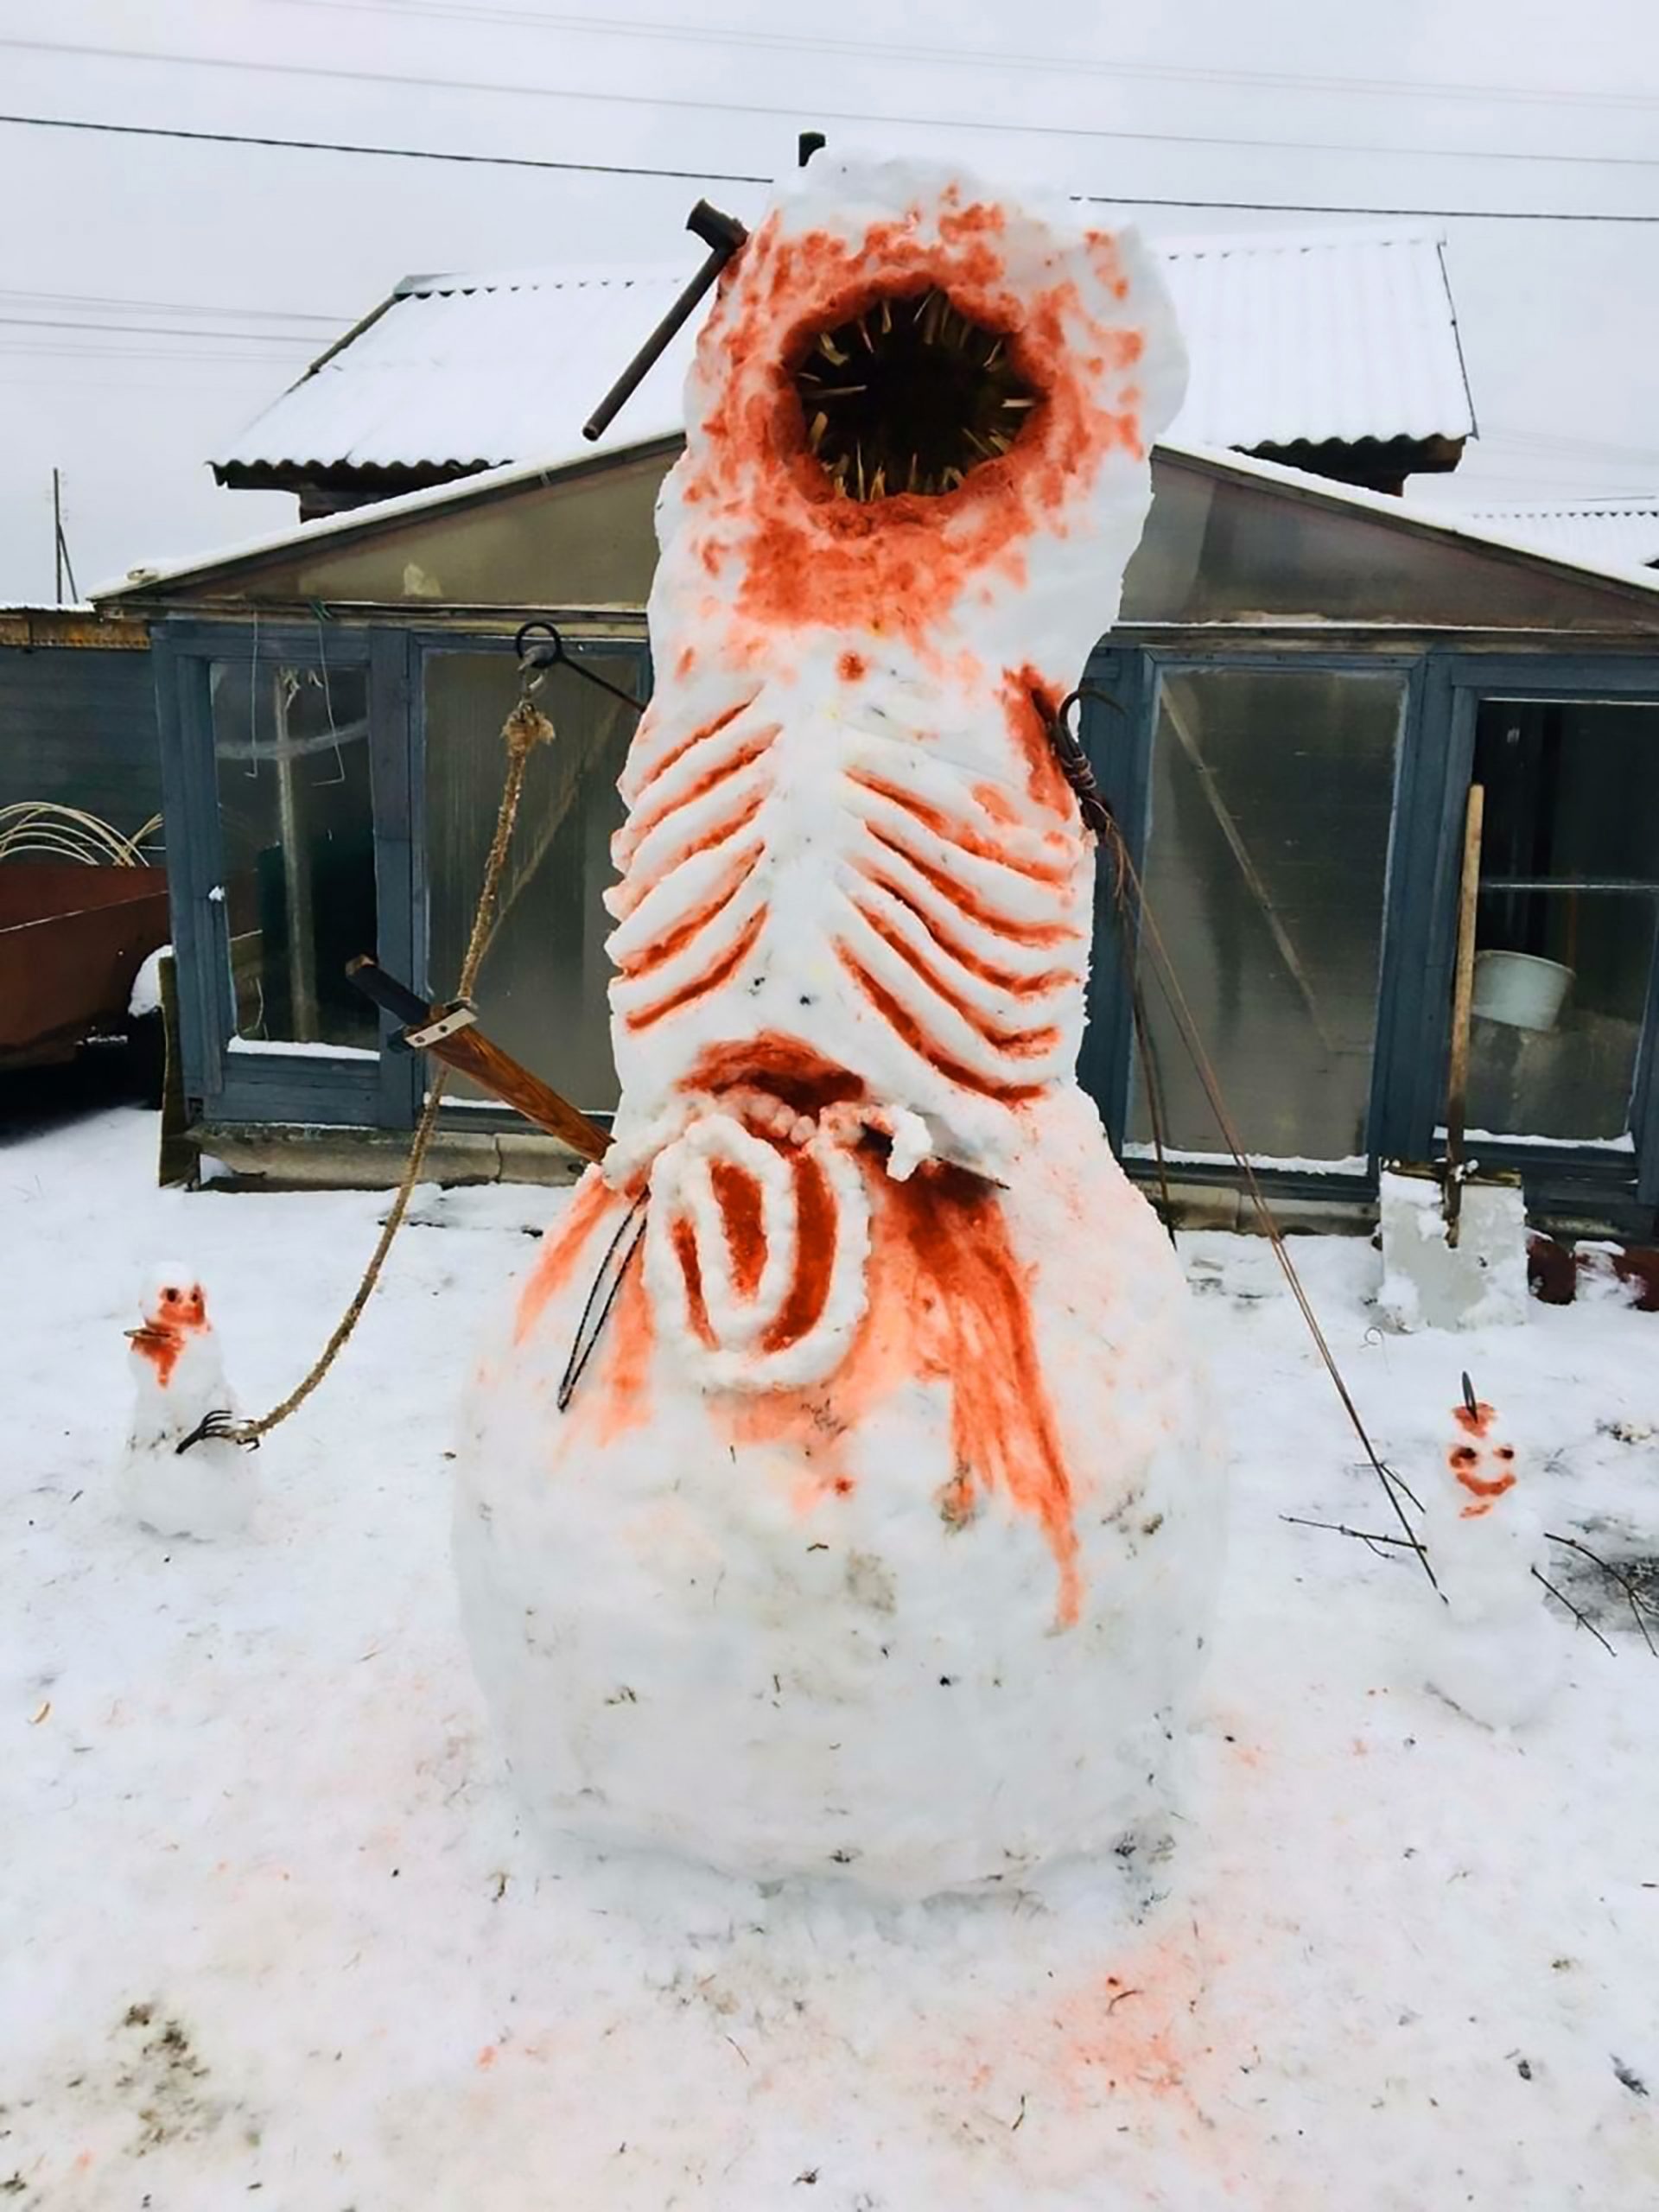 Fanged Monster Captured By Snowmen In Gory Snow Scene - ViralTab